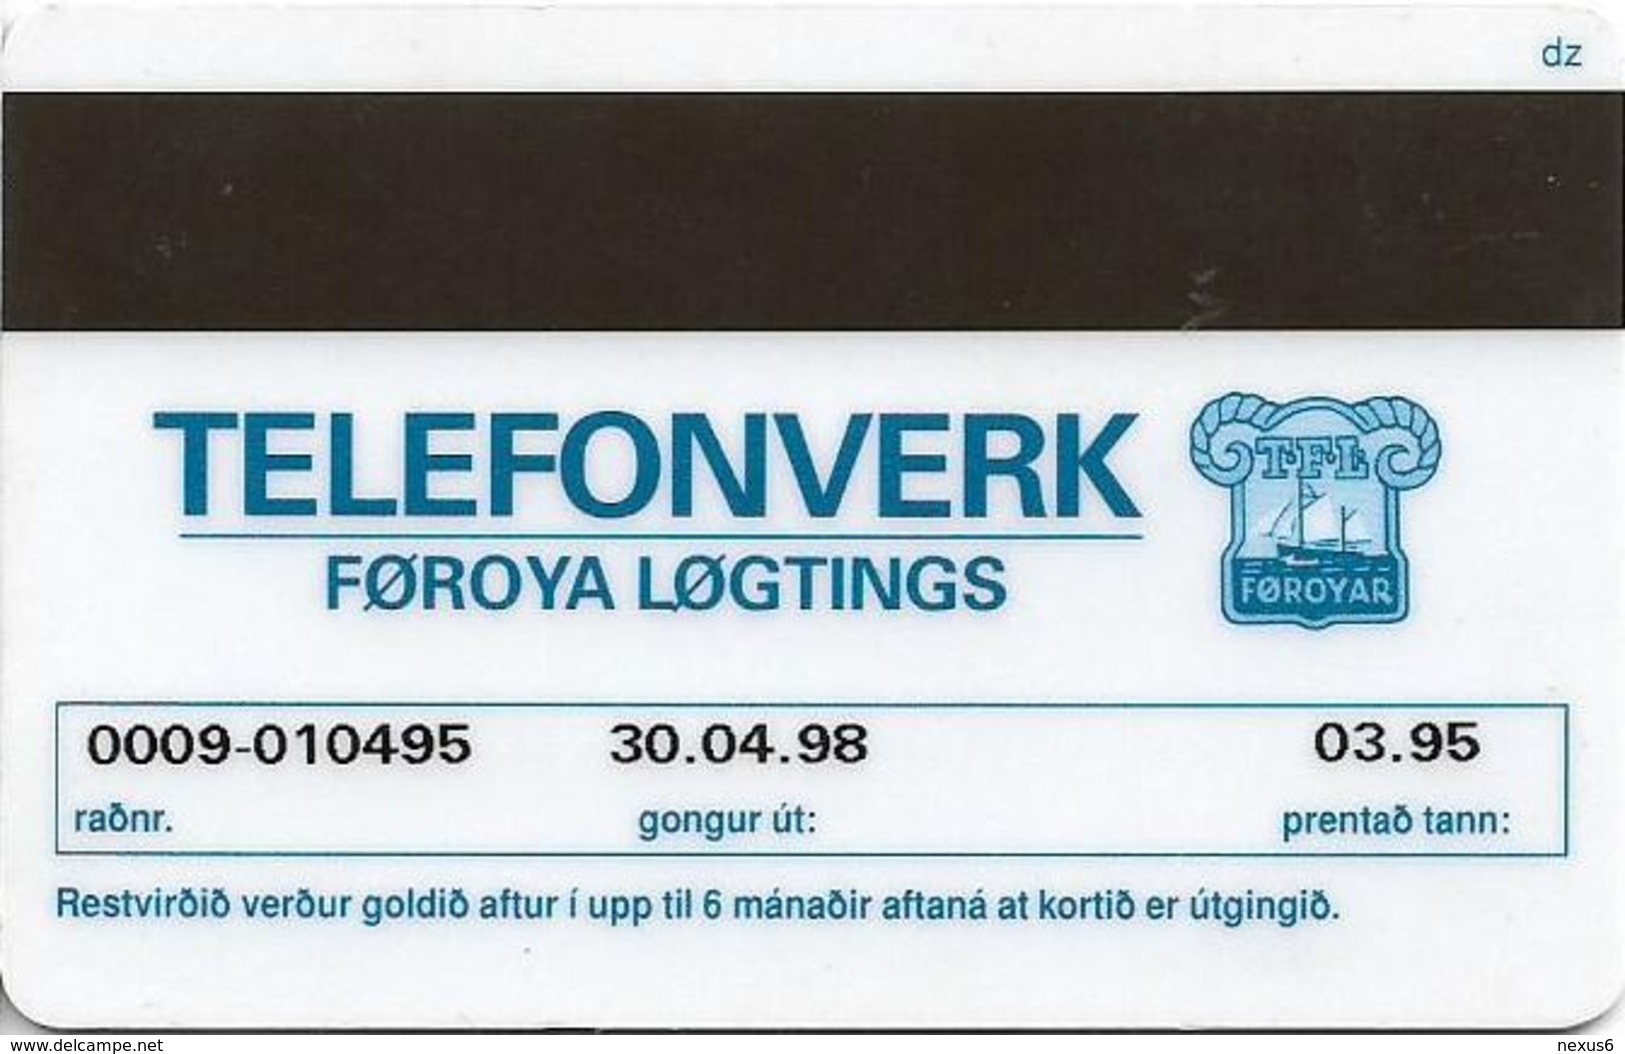 Faroe - Faroese Telecom (Magnetic) - National Costume (children) - 20Kr. - 15.000ex, Used - Faroe Islands